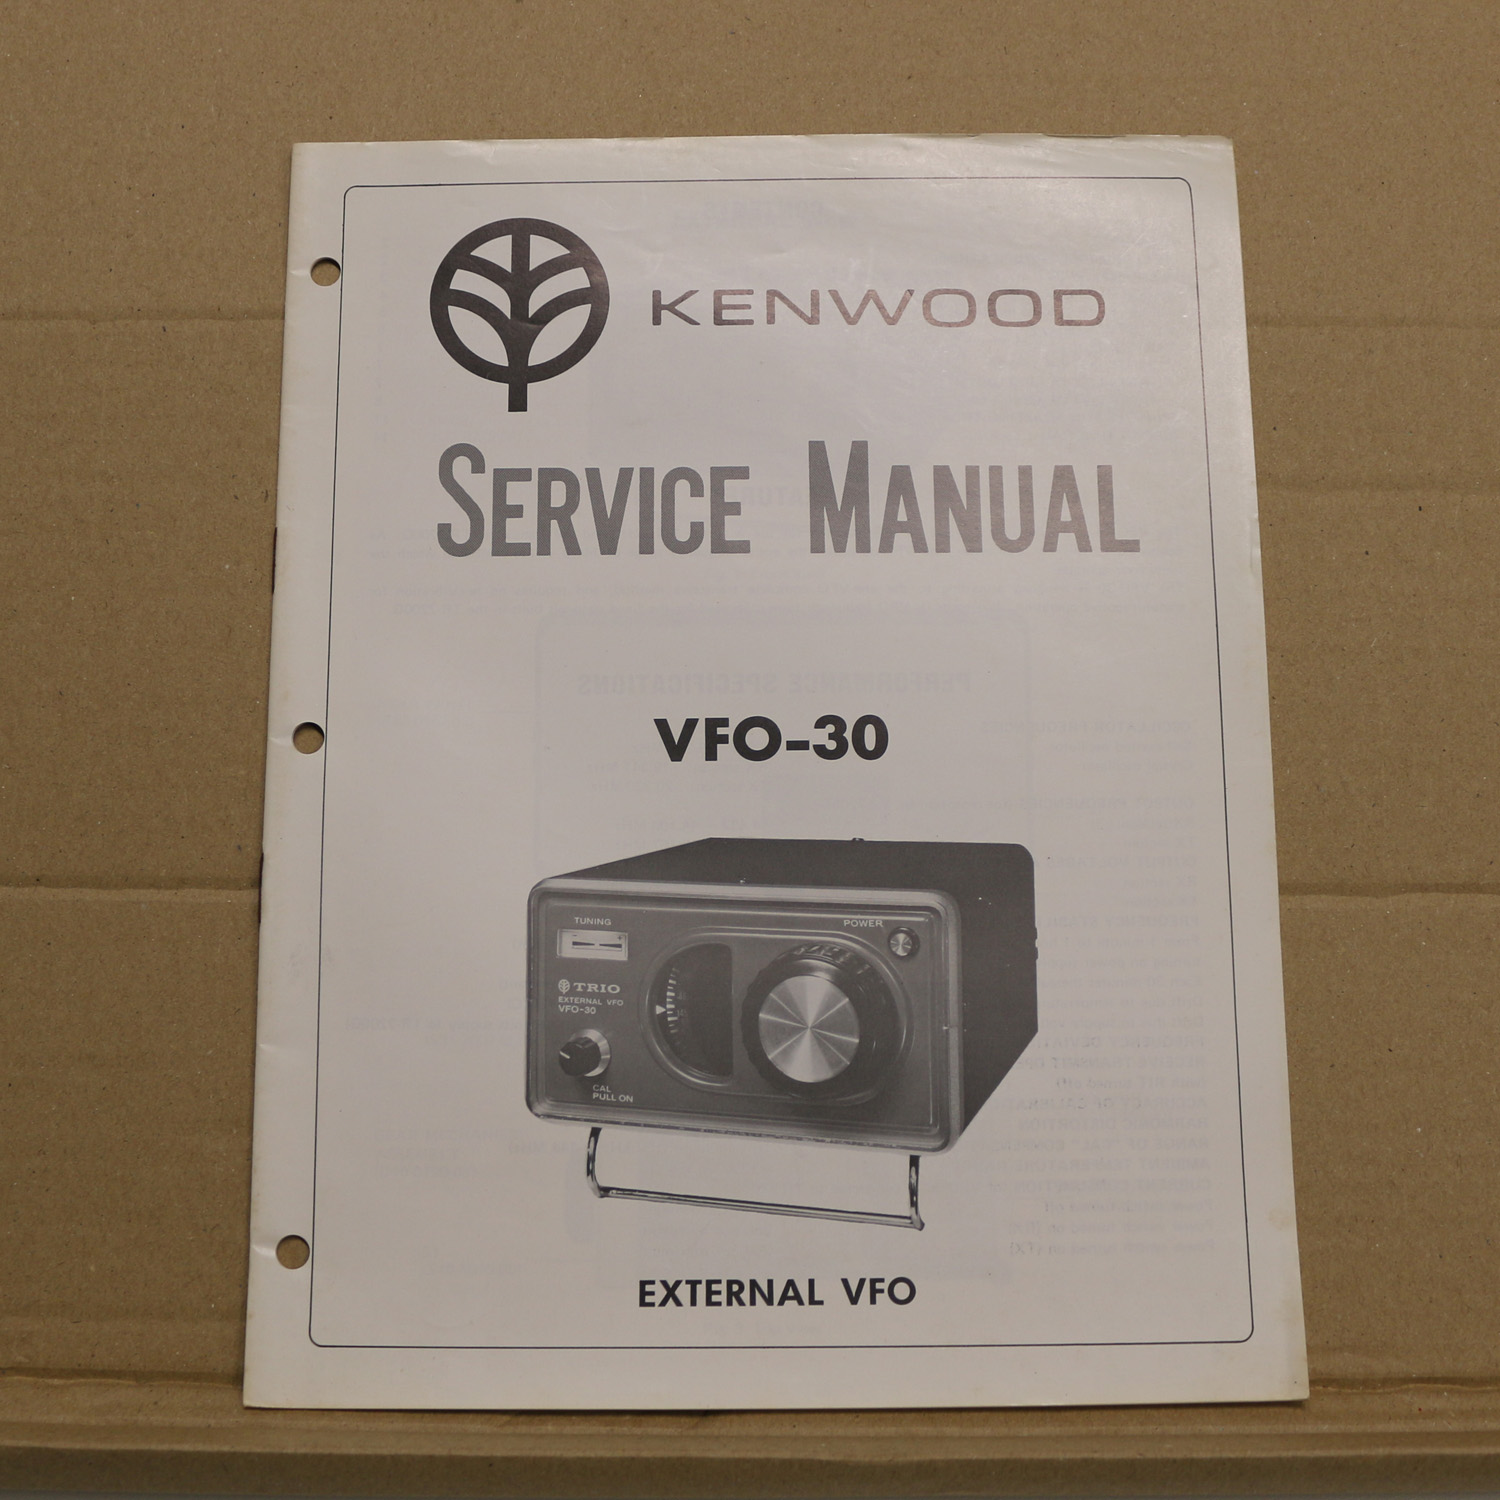 Kenwood VFO-30 Service Manual